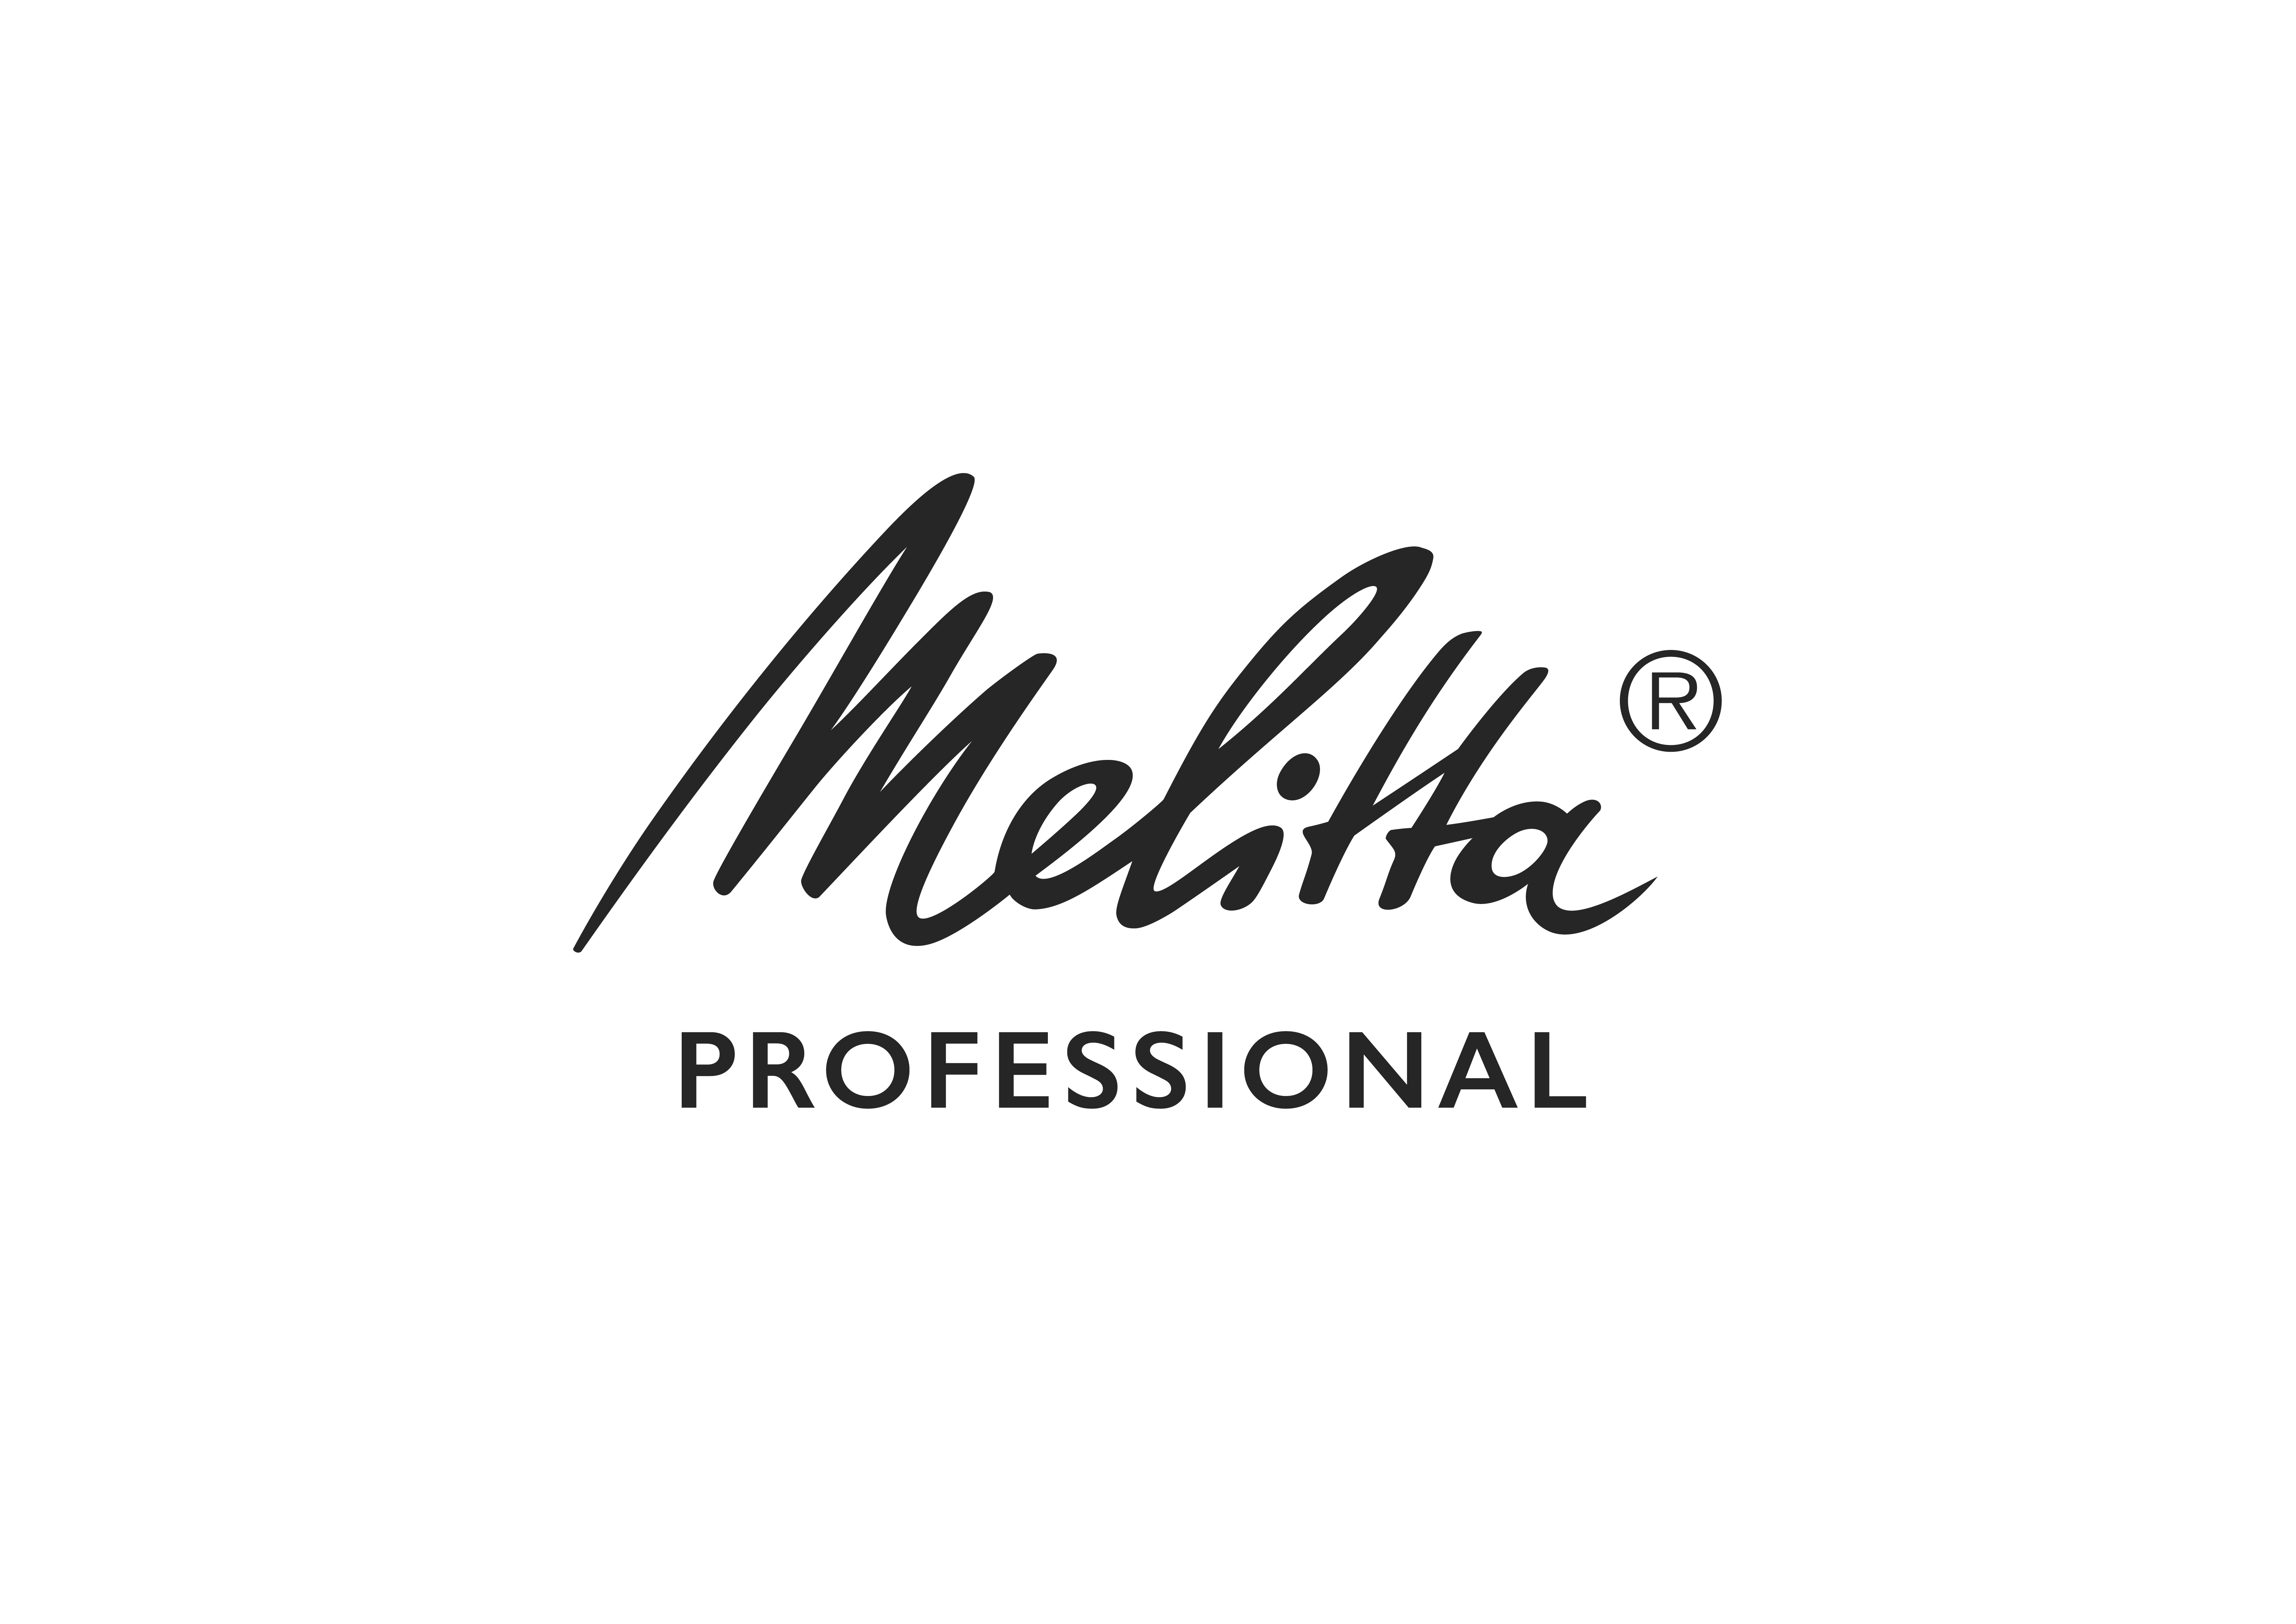 Melitta Professional Coffee Solutions